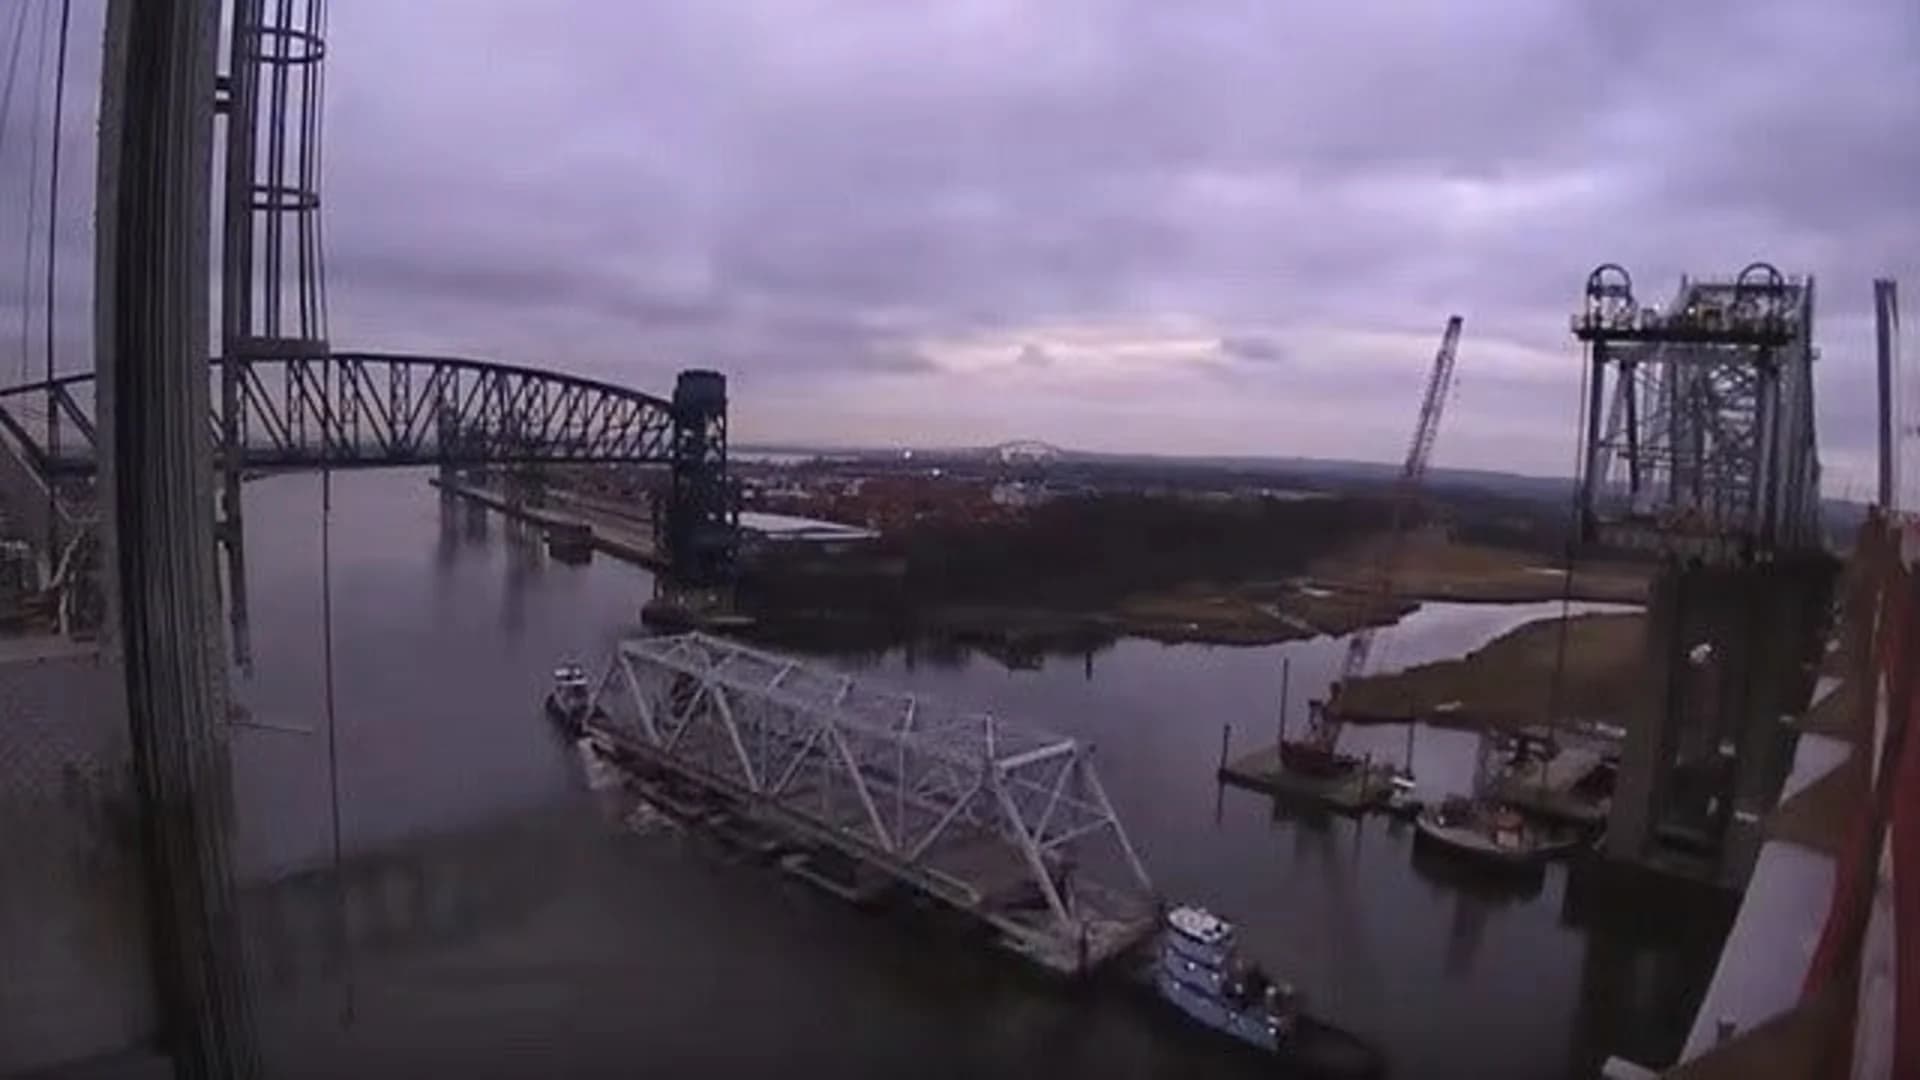 Watch: Main span of Goethals Bridge hauled off for scrap